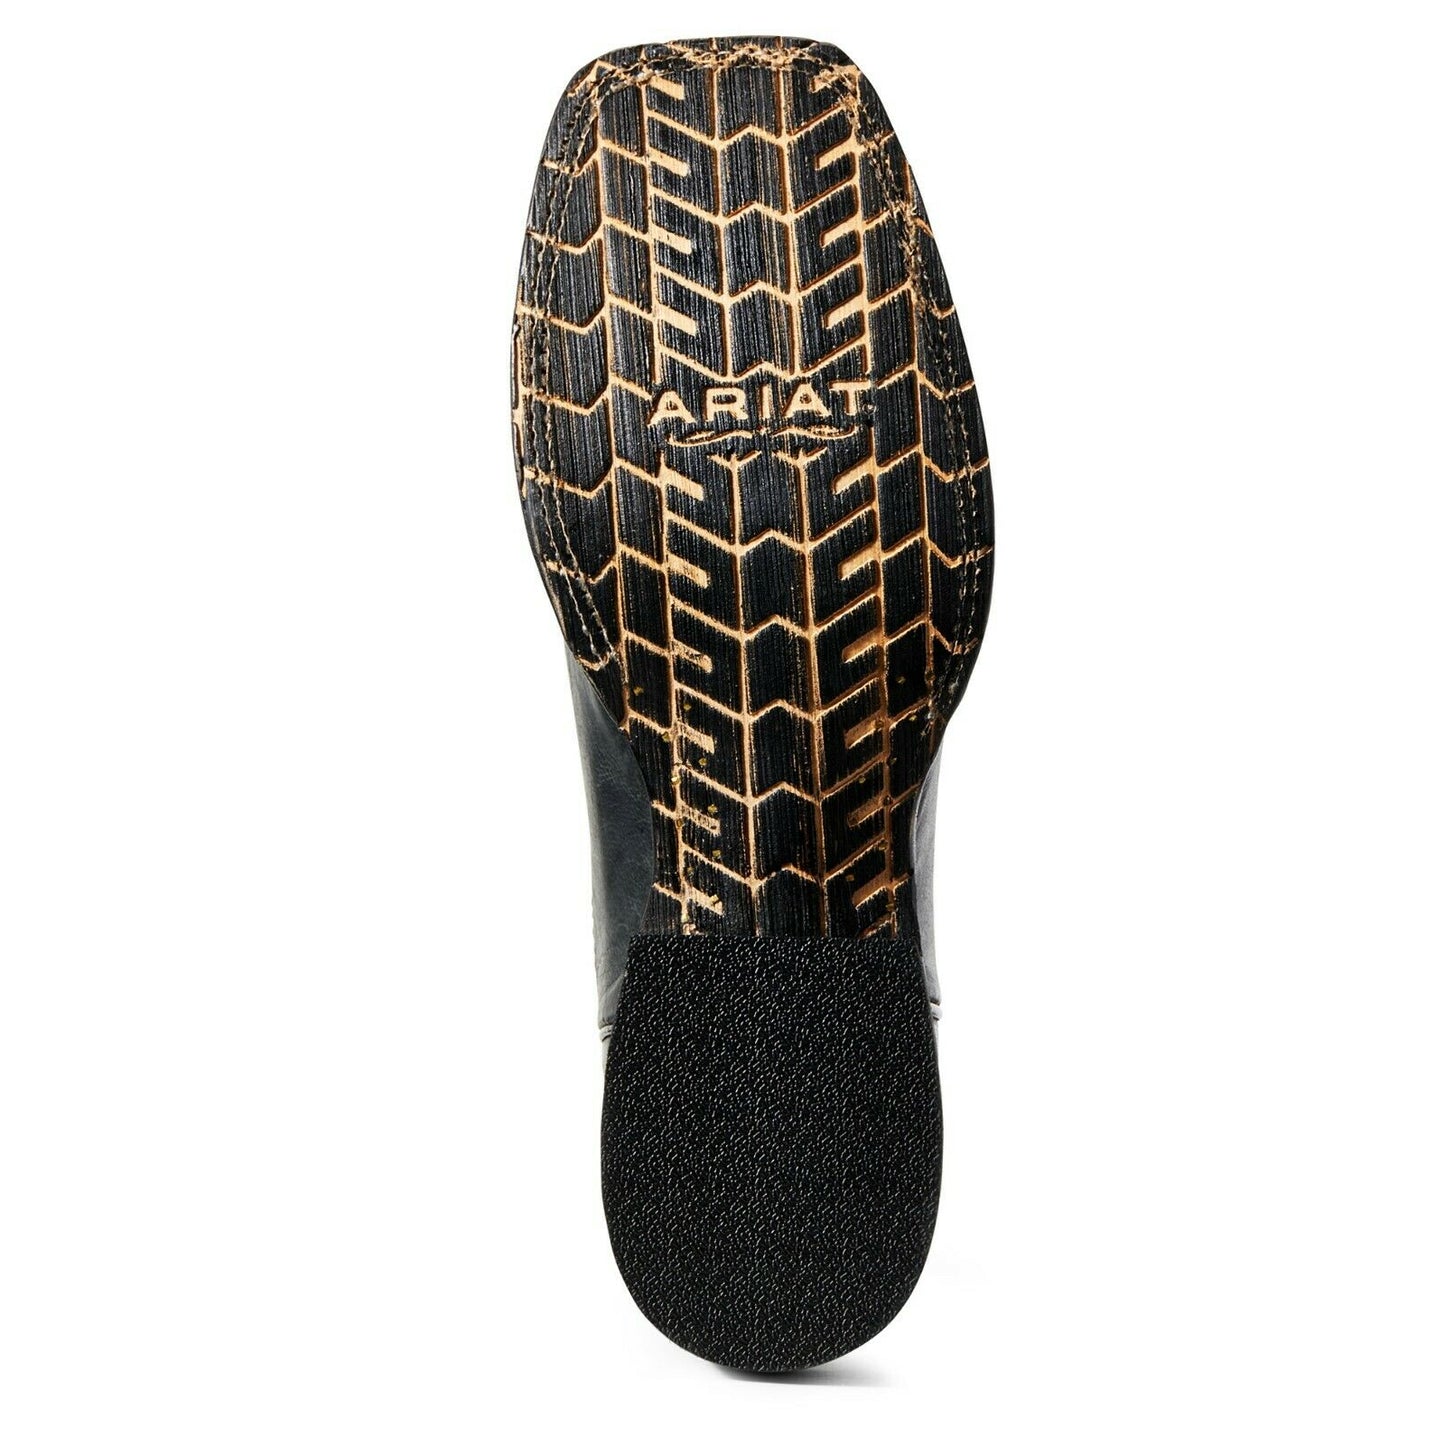 Ariat® Men's Circuit Patriot Black Carbon Boots 10029700